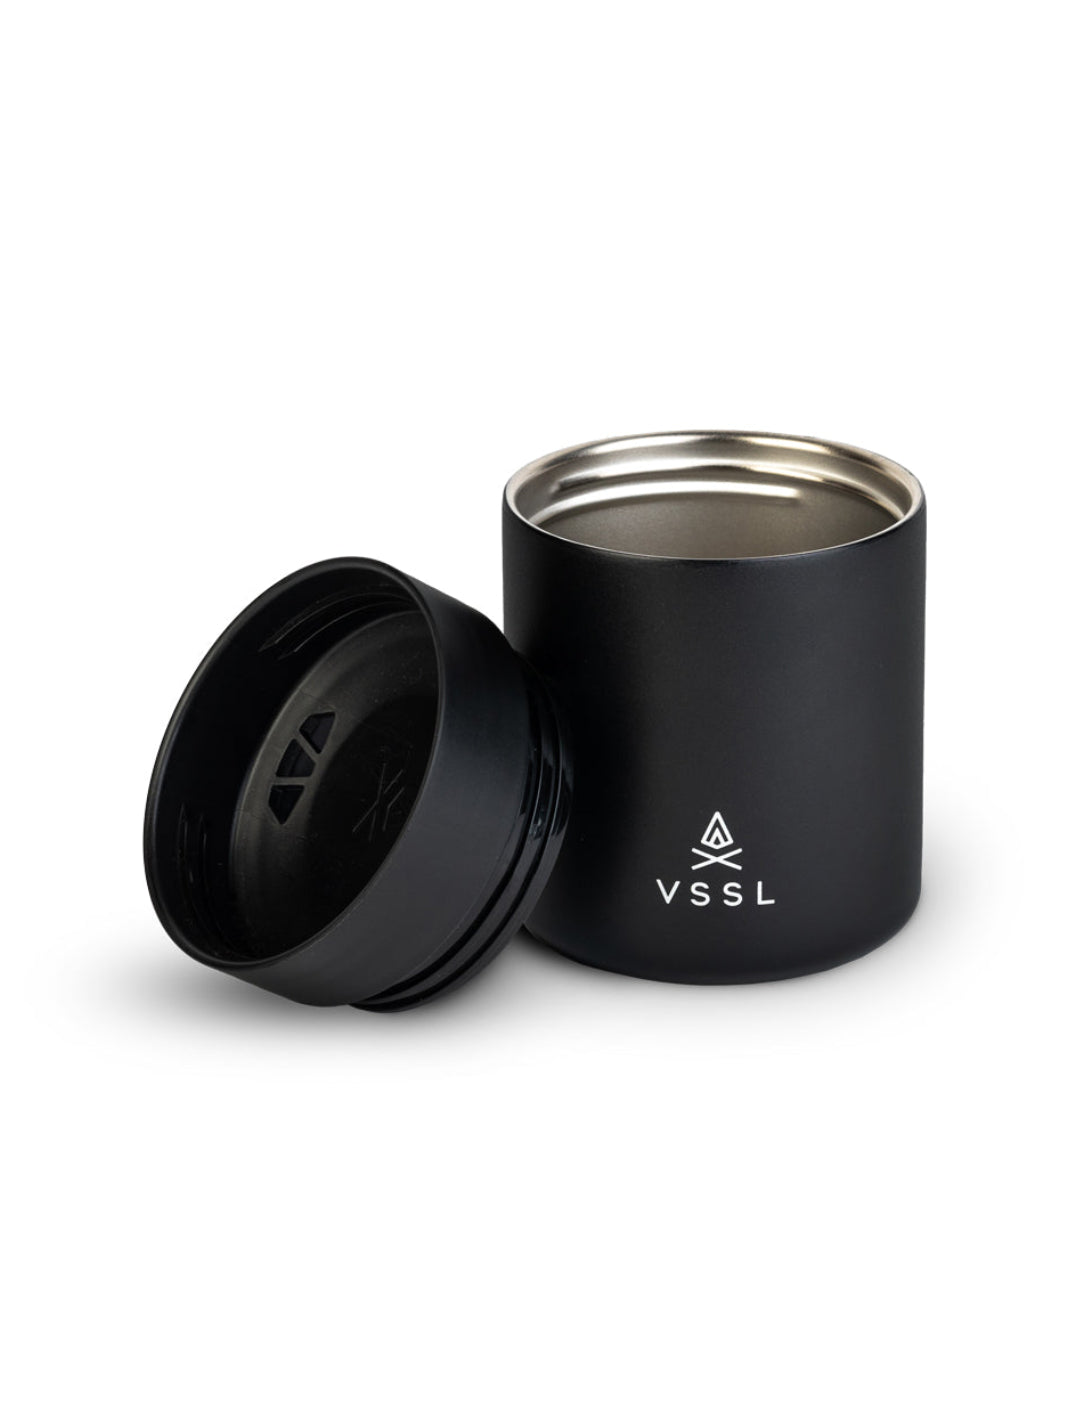 VSSL Nest Mug (295ml/10oz) (Black)